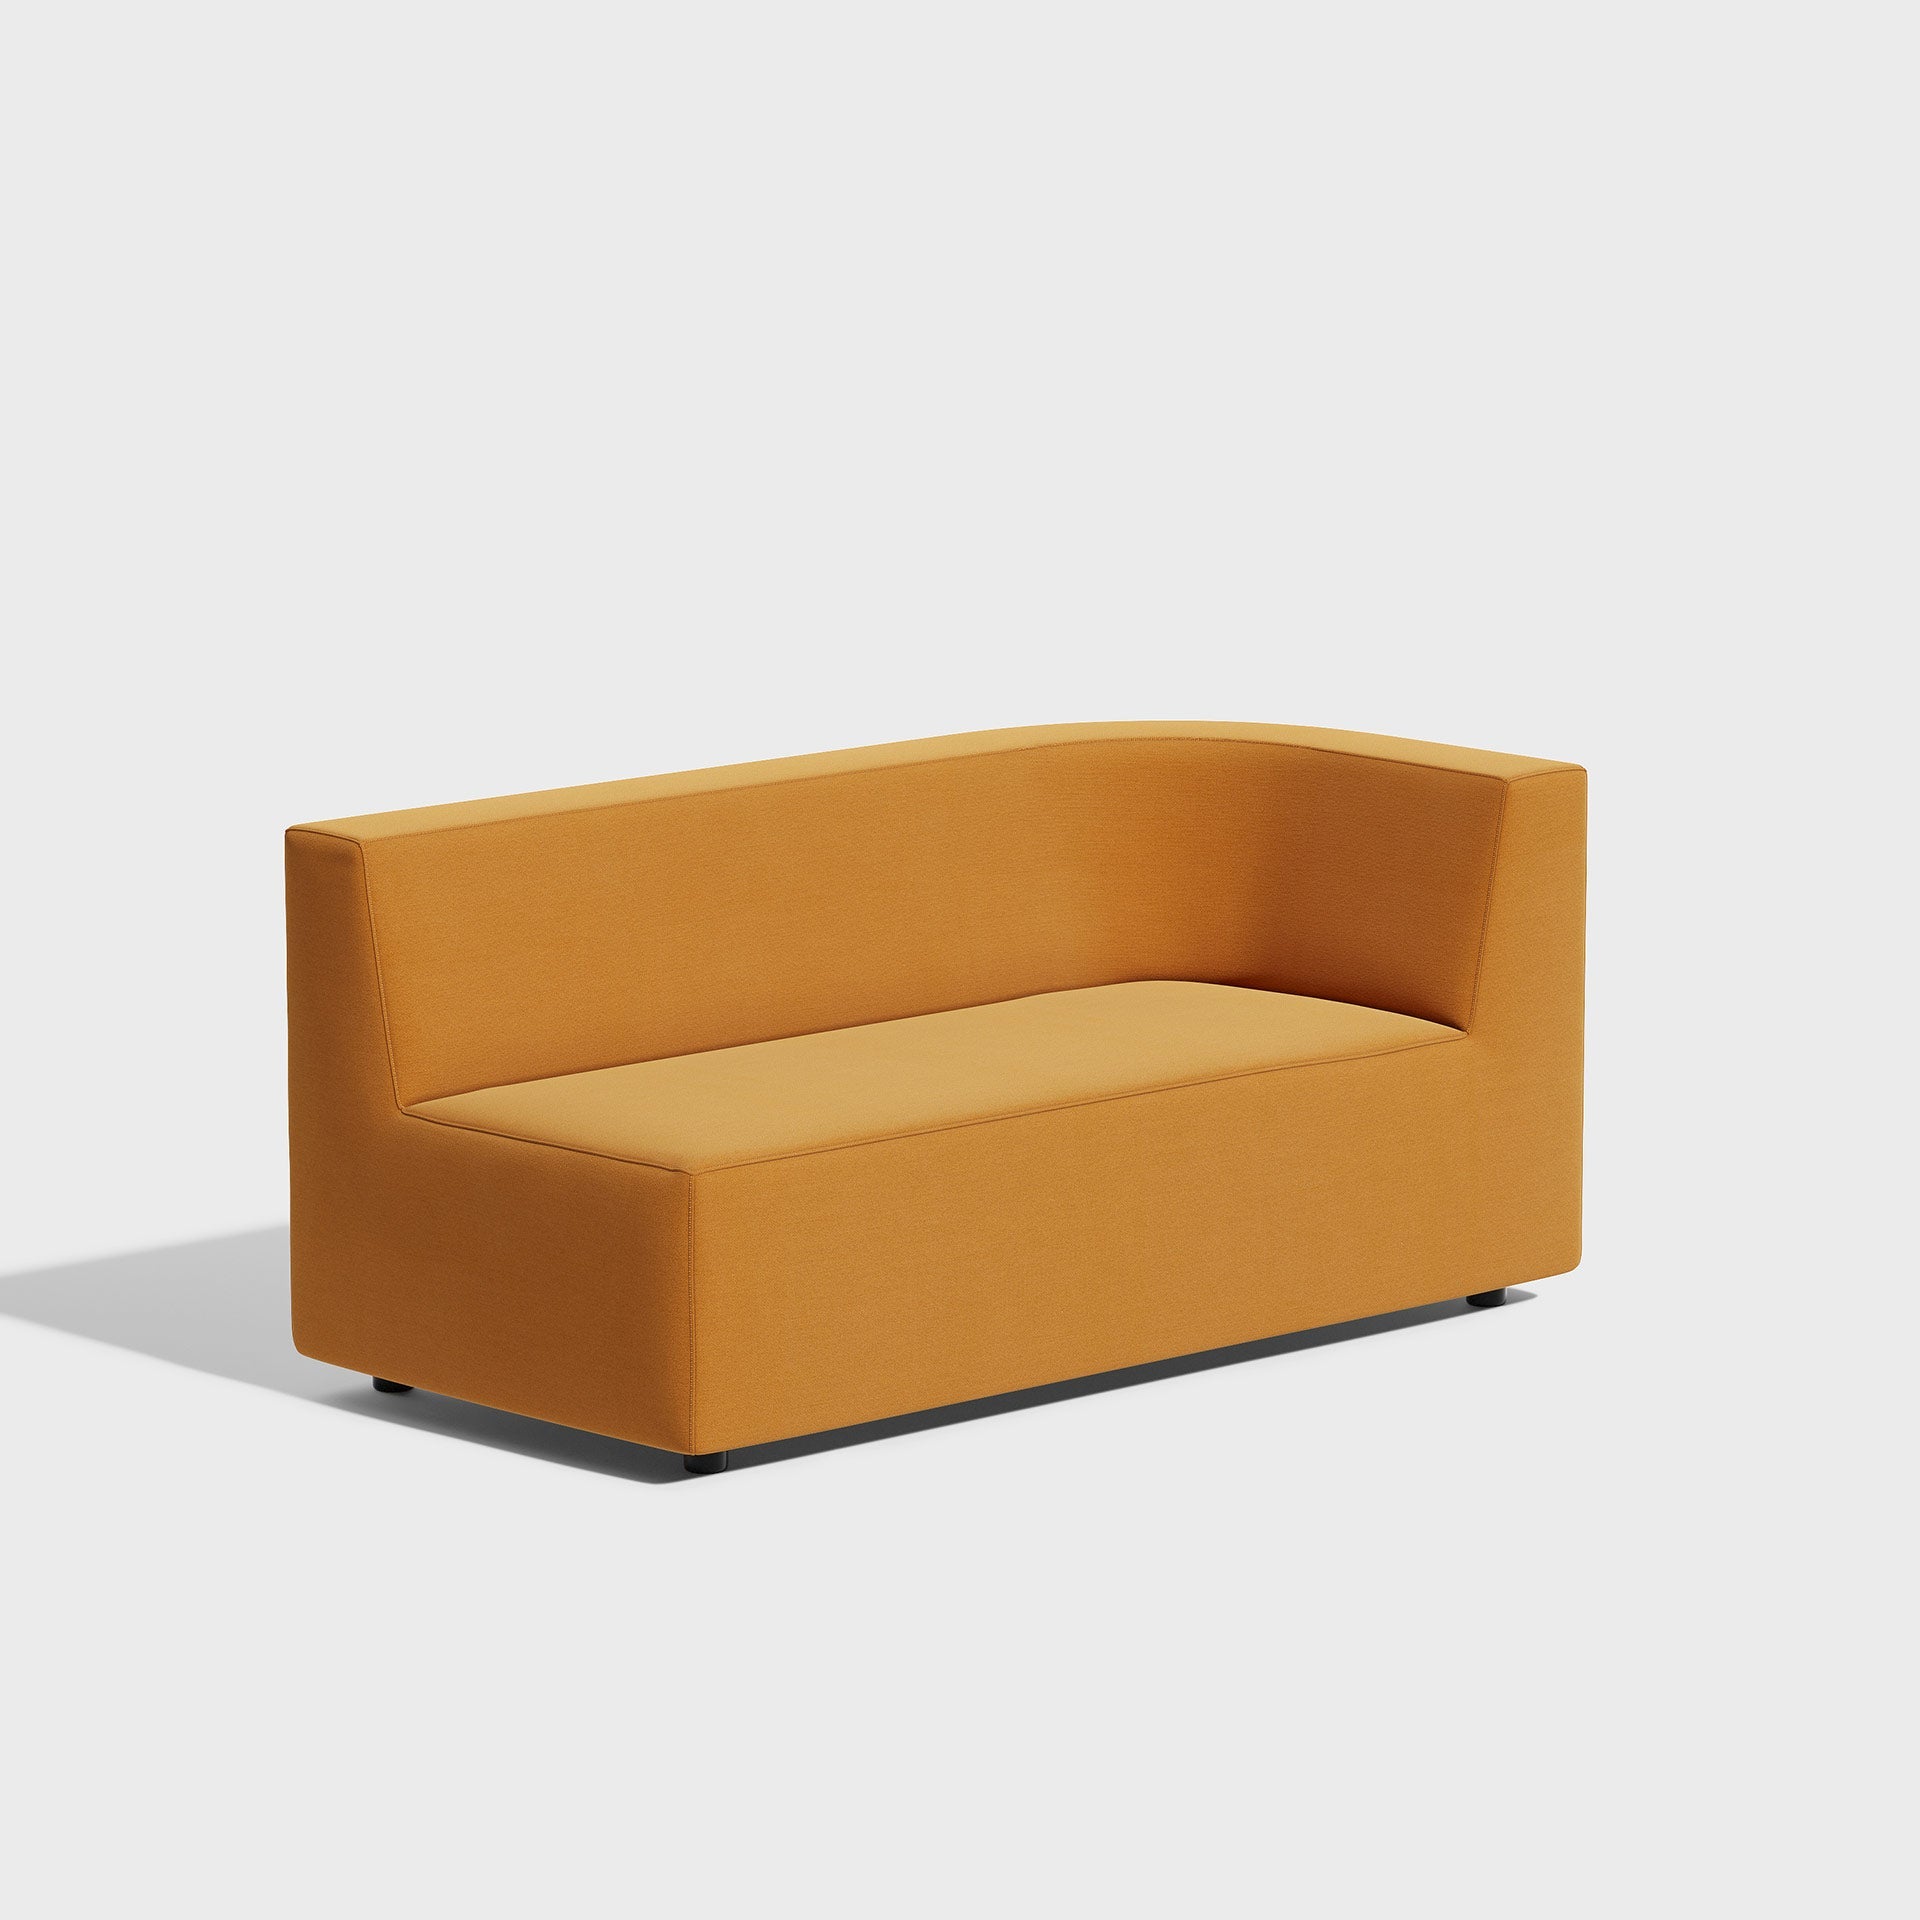 Confetti Modular Lounge | DesignByThem ** HF5 - Kvadrat Febrik Planum - 0351 / Low Profile Feet / Open Closed